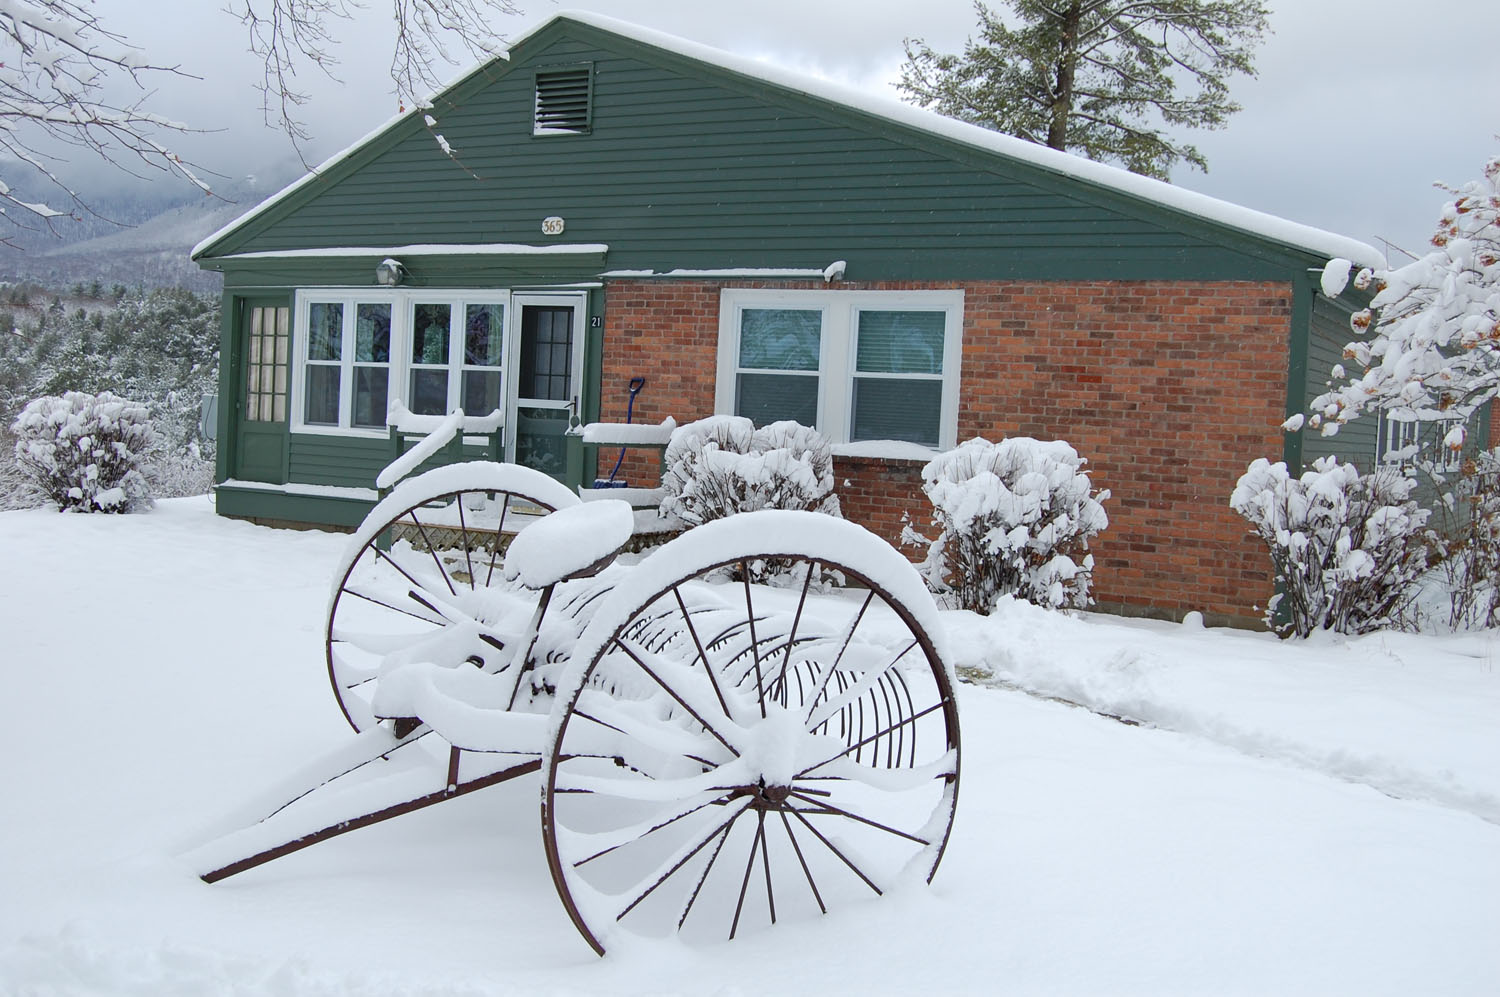 Innkeepers Cottage in Snow.jpg